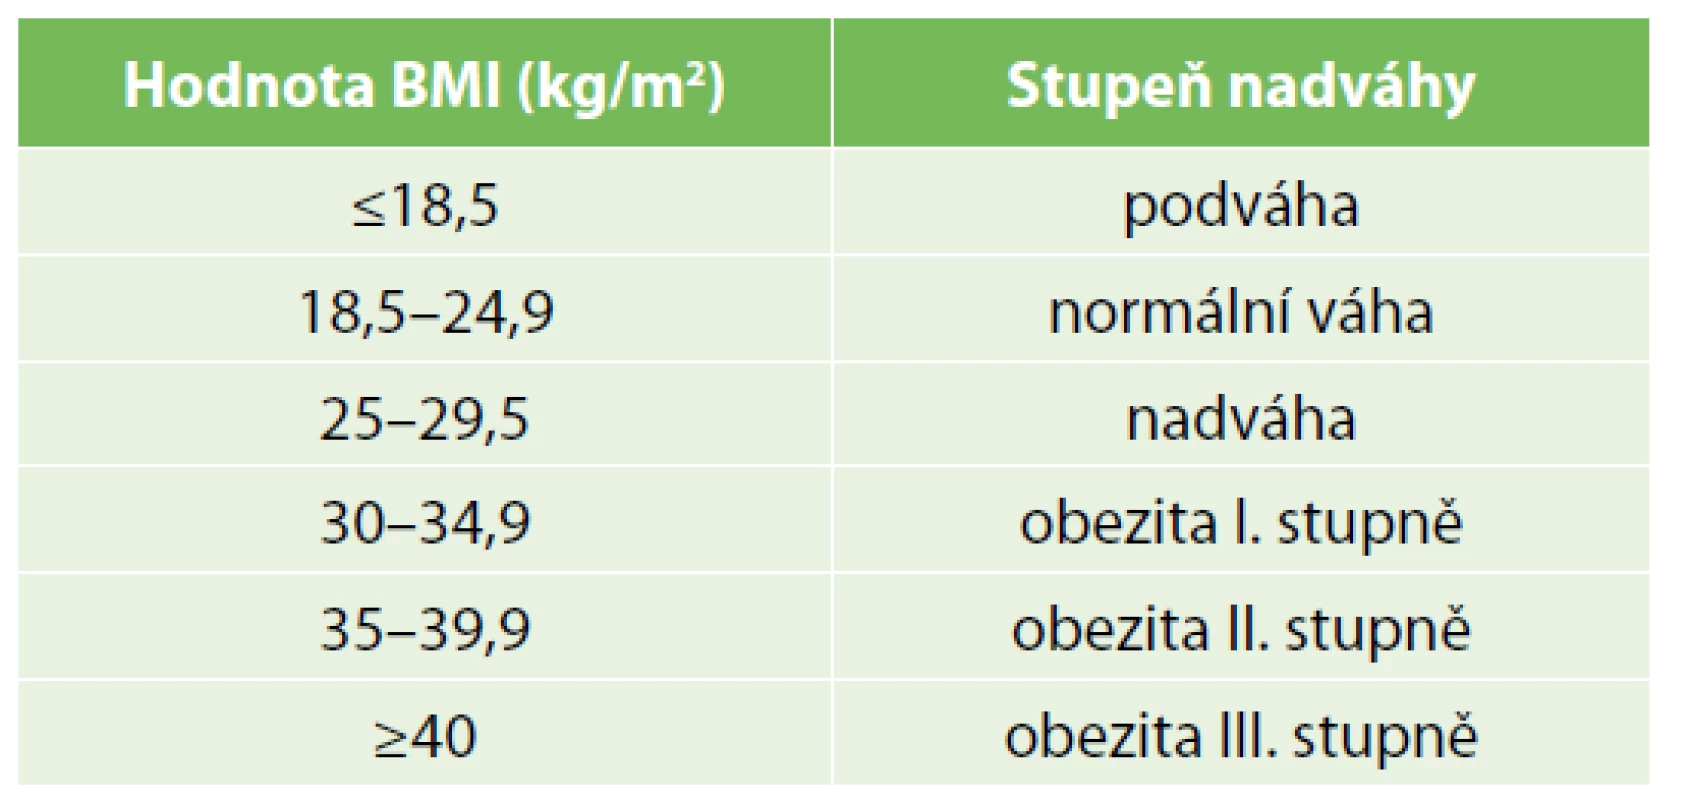 Klasifikace obezity dle BMI<br>
Tab. 1: BMI classification